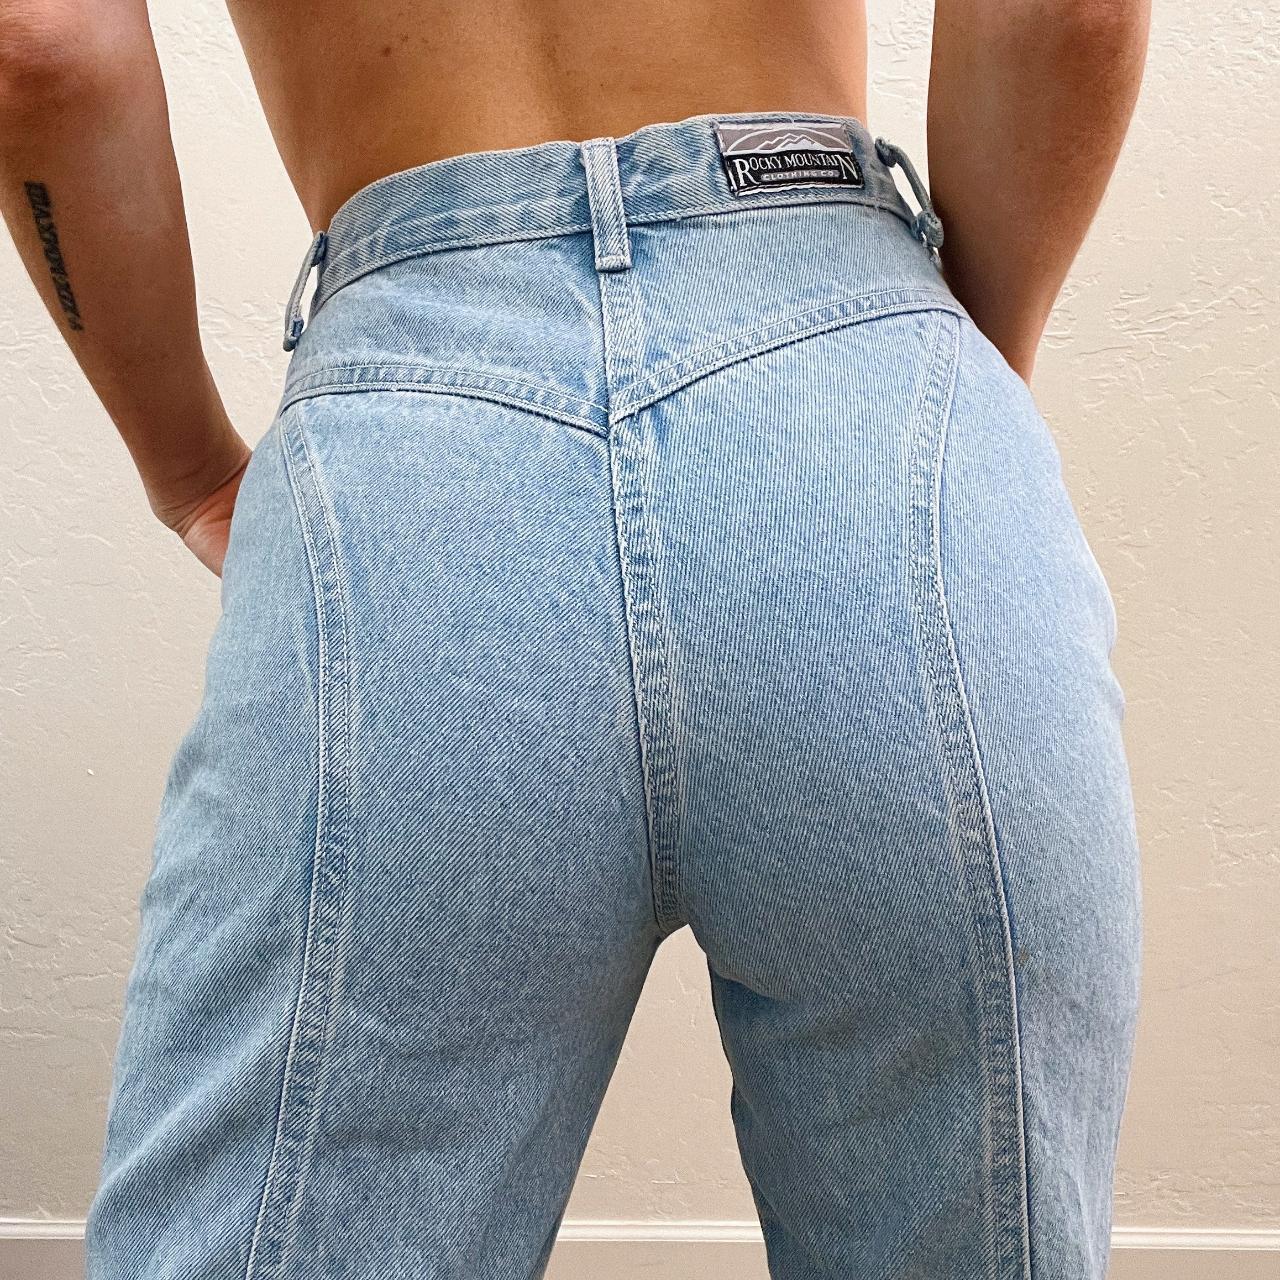 rockies jeans 90s